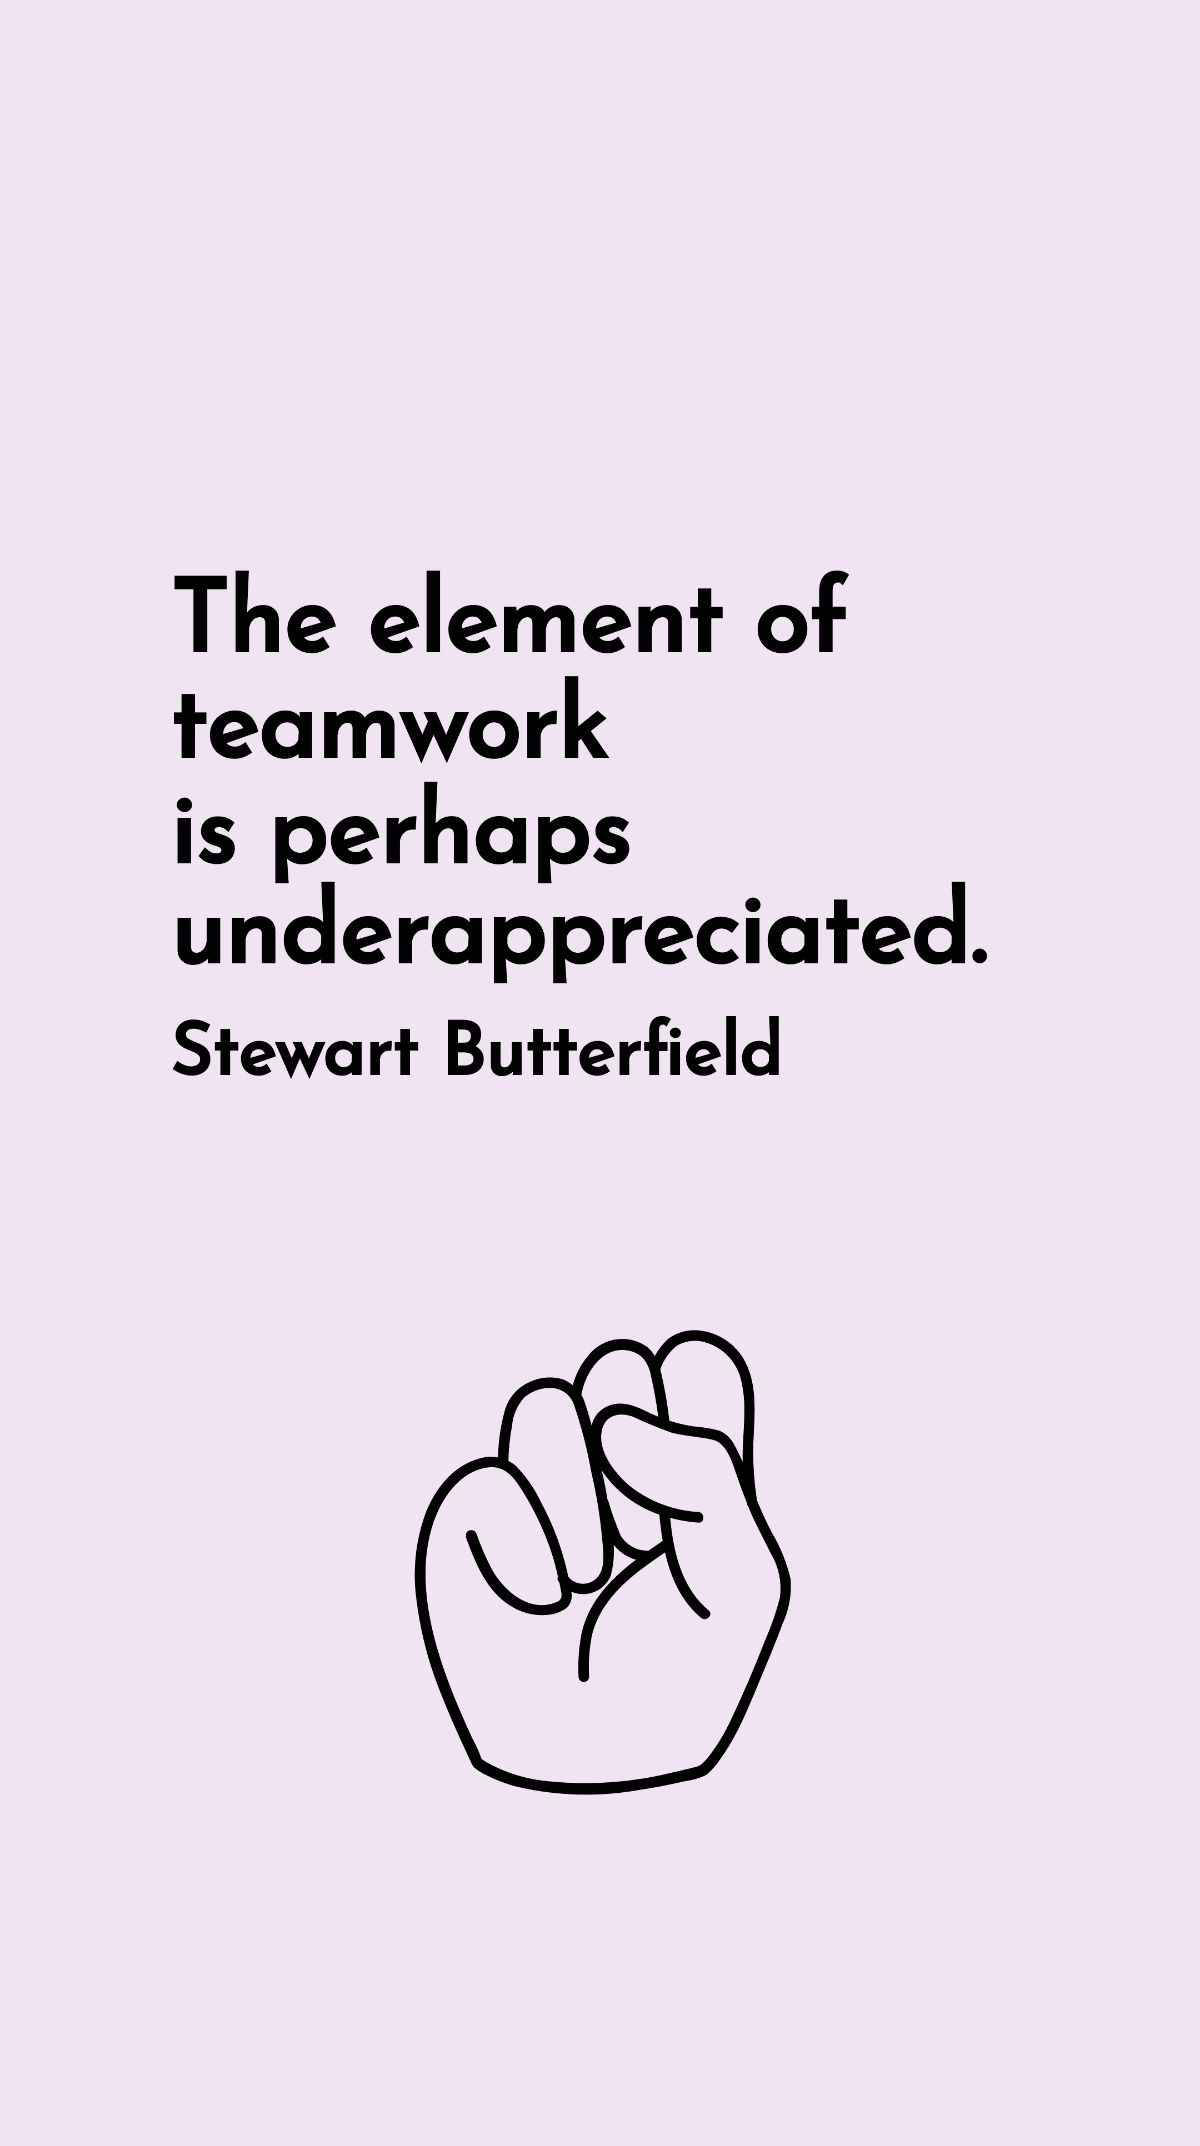 Stewart Butterfield - The element of teamwork is perhaps underappreciated.